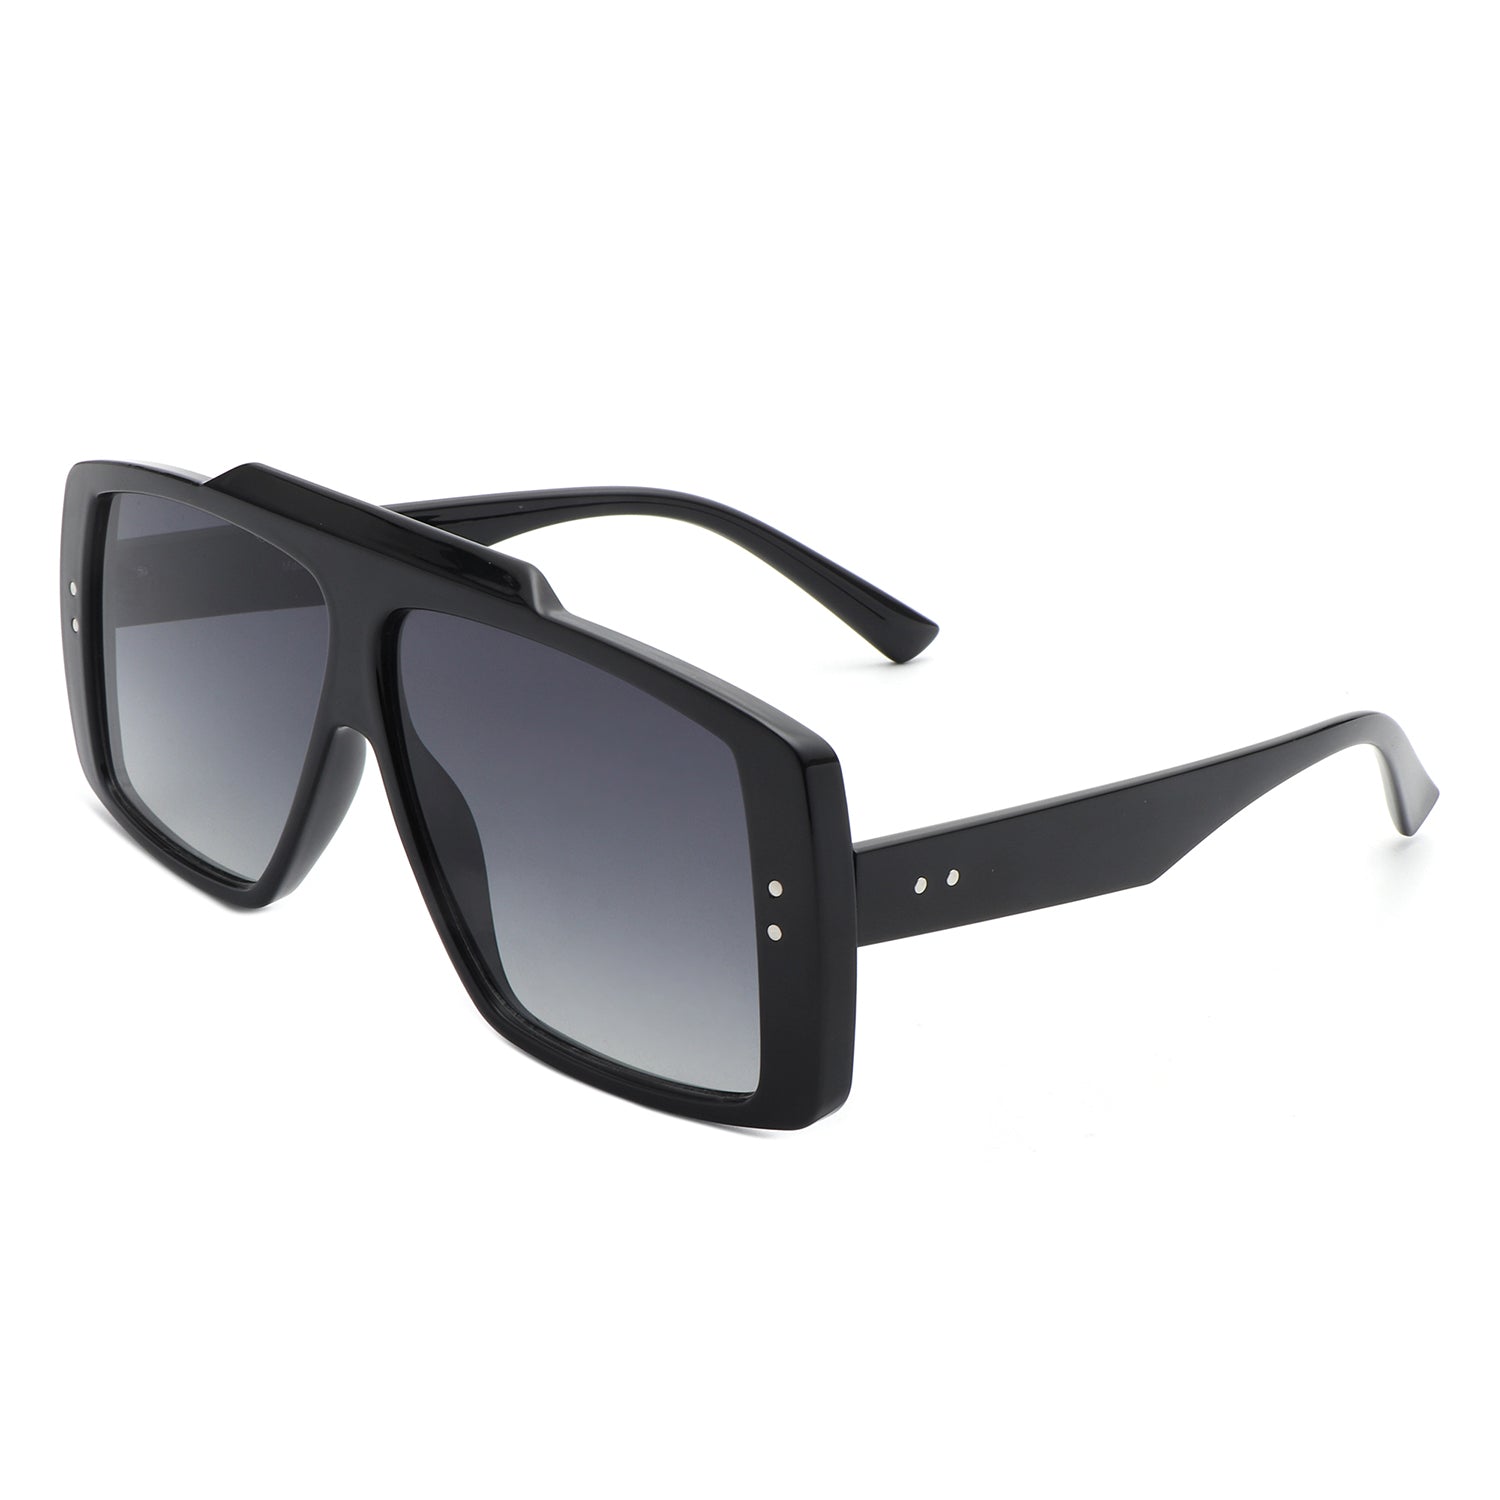 S2128 - Square Retro Flat Top Vintage Inspired Fashion Wholesale Sunglasses